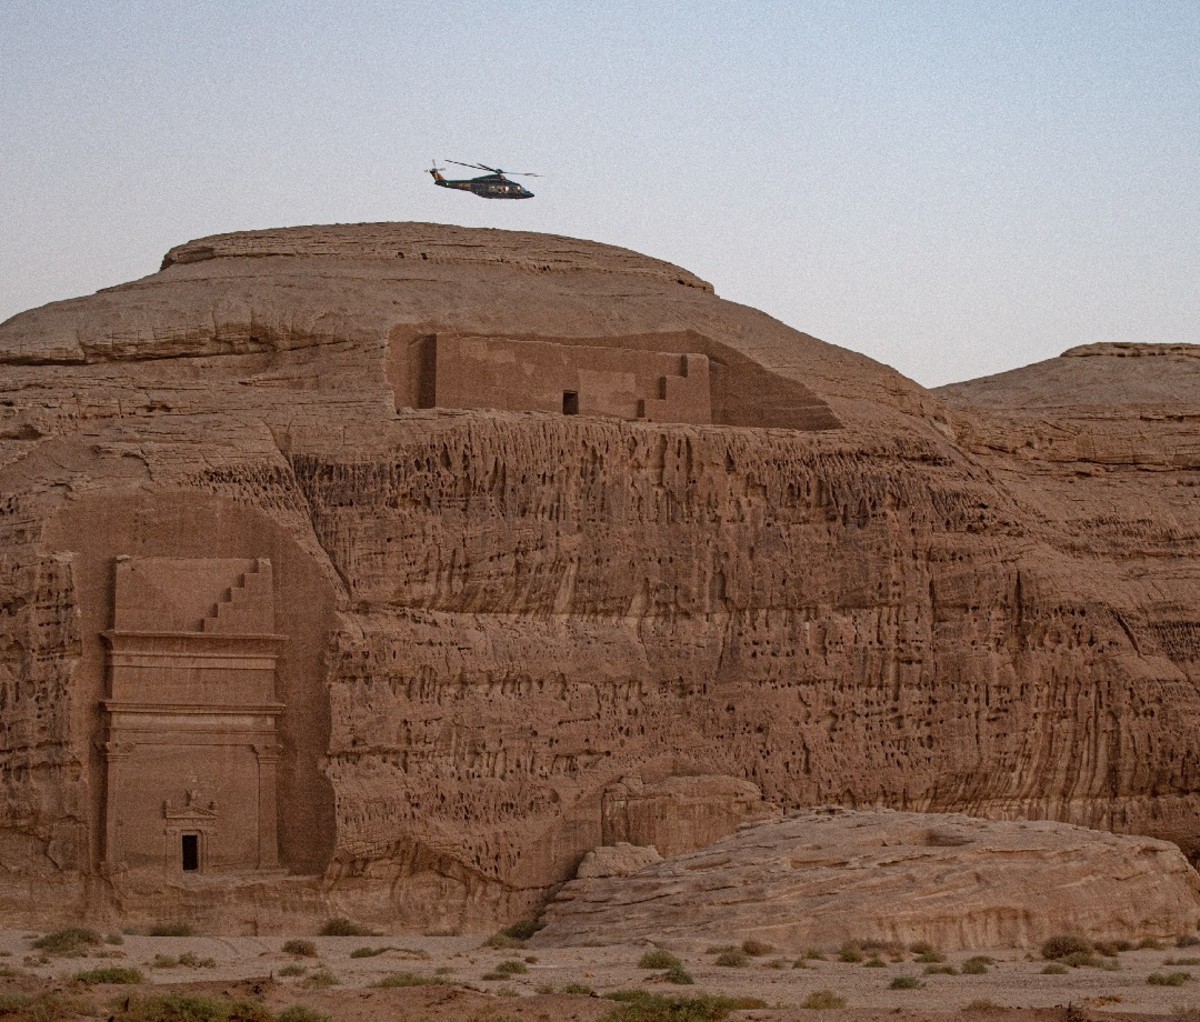 Helicopter flies over UNESCO World Heritage Site of Hegra near city of AlUla in Saudi Arabia